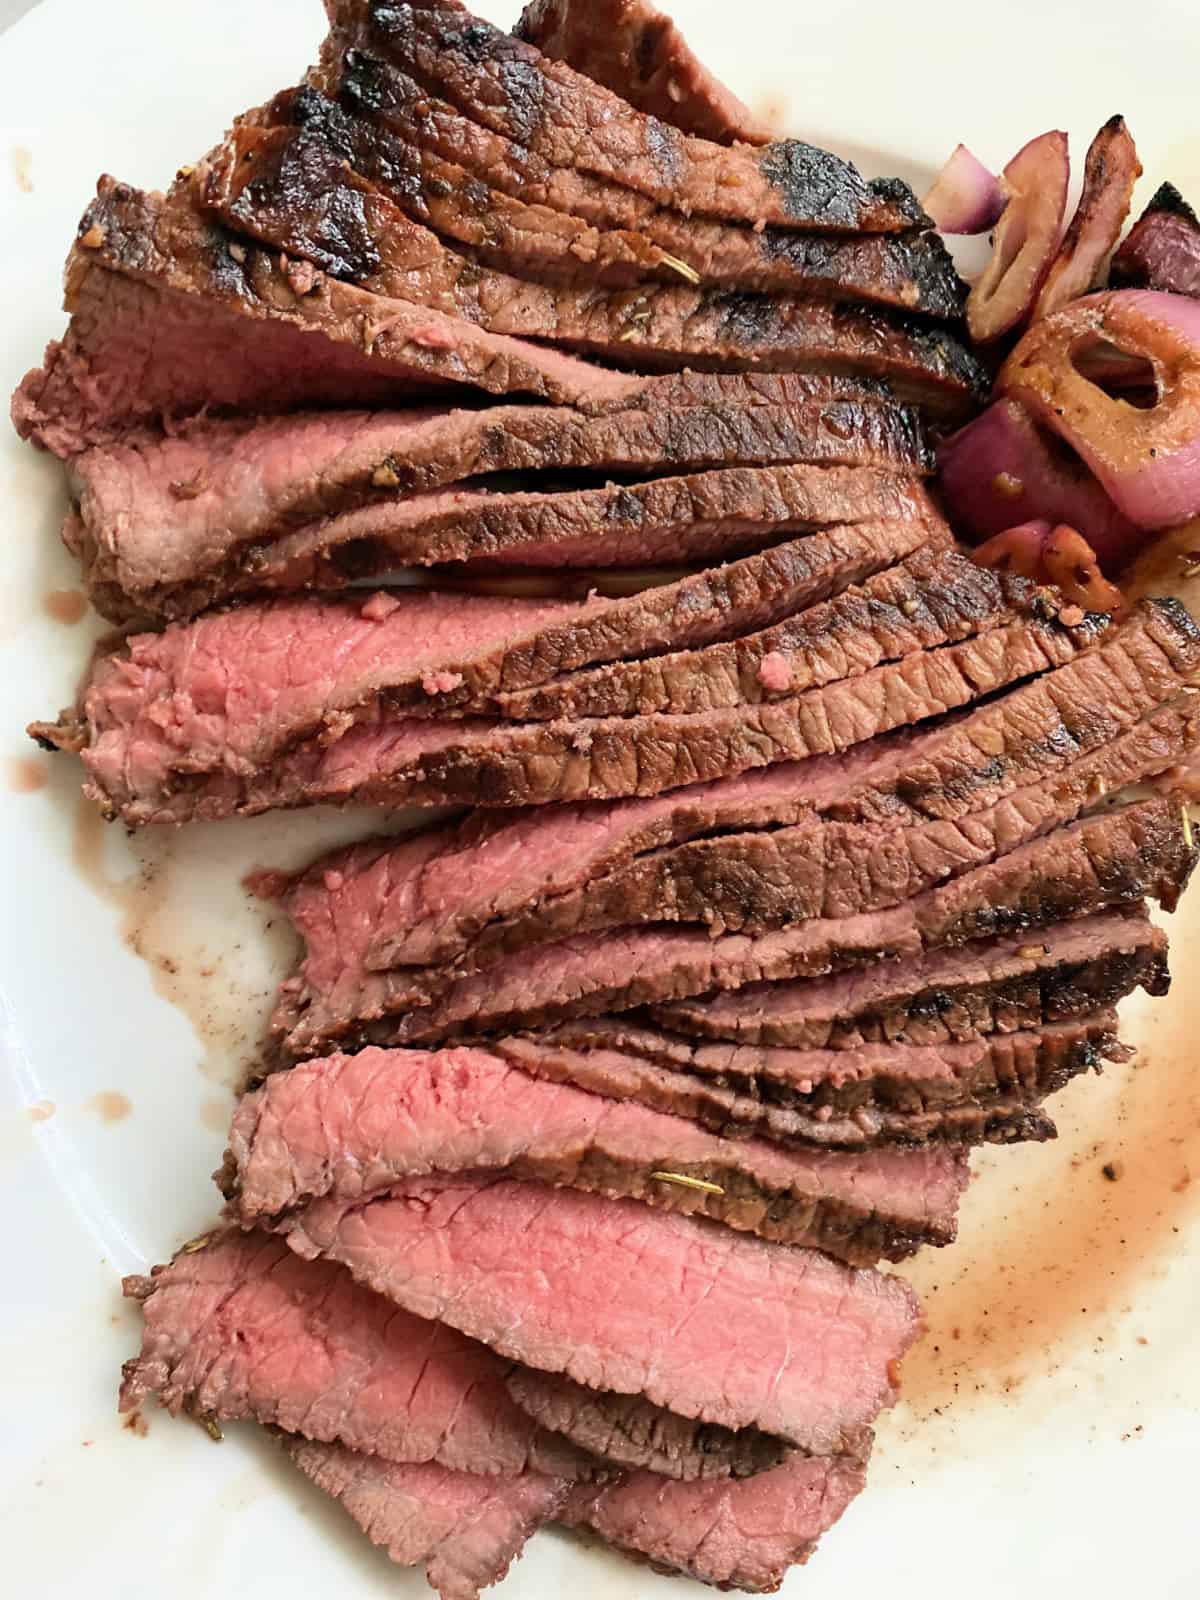 Sliced medium-rare steak on a white plate.